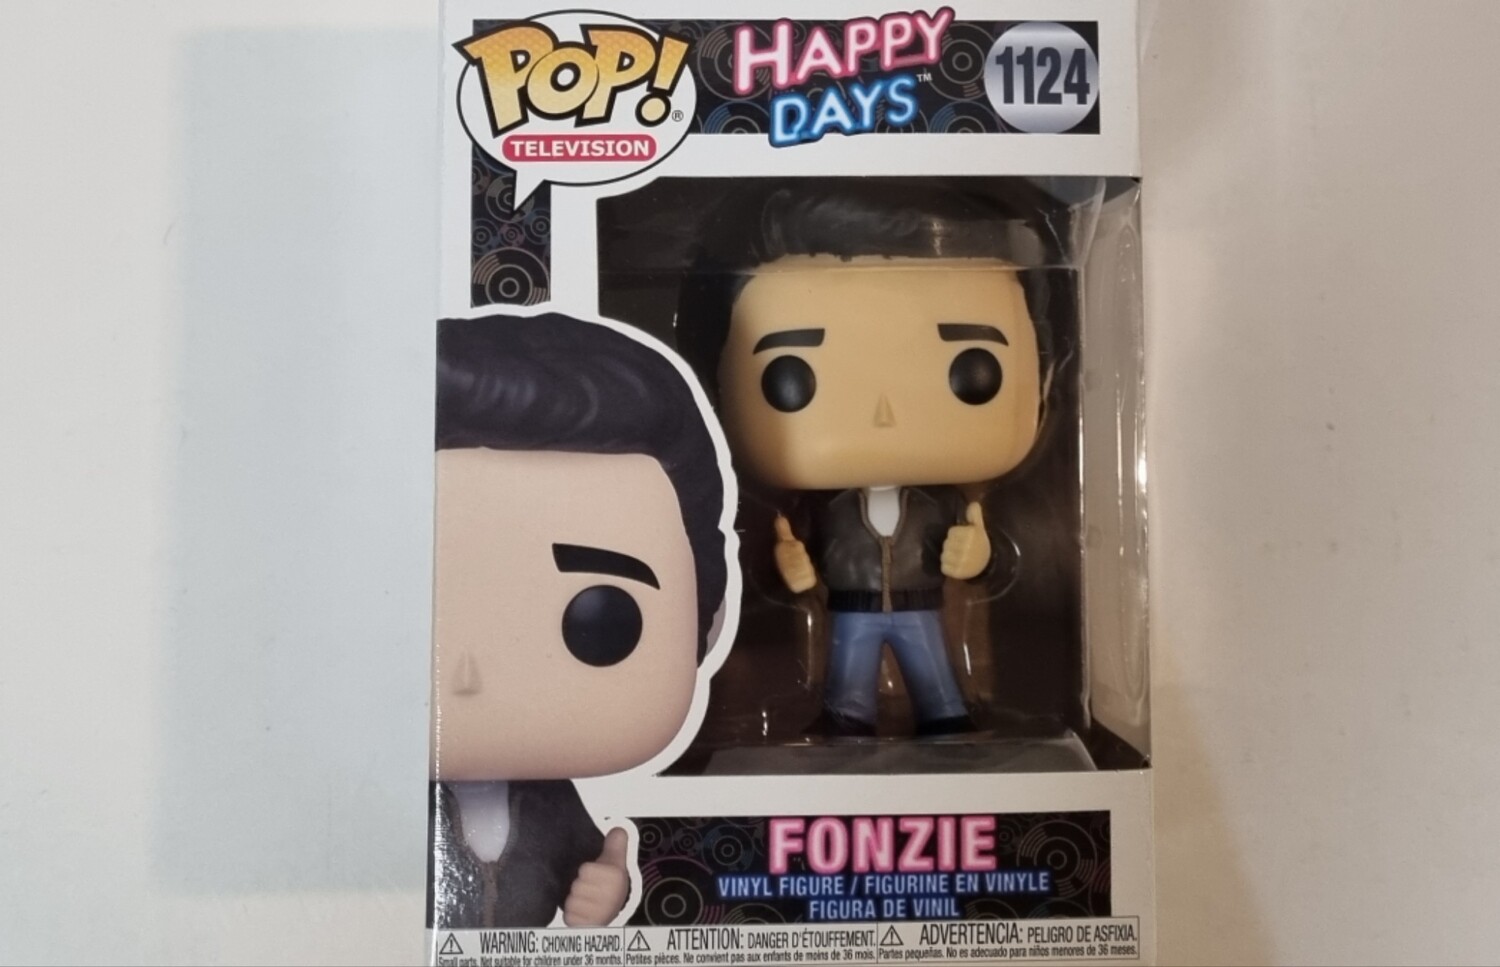 Funko Pop! Television #1124 Fonzie, Happy Days